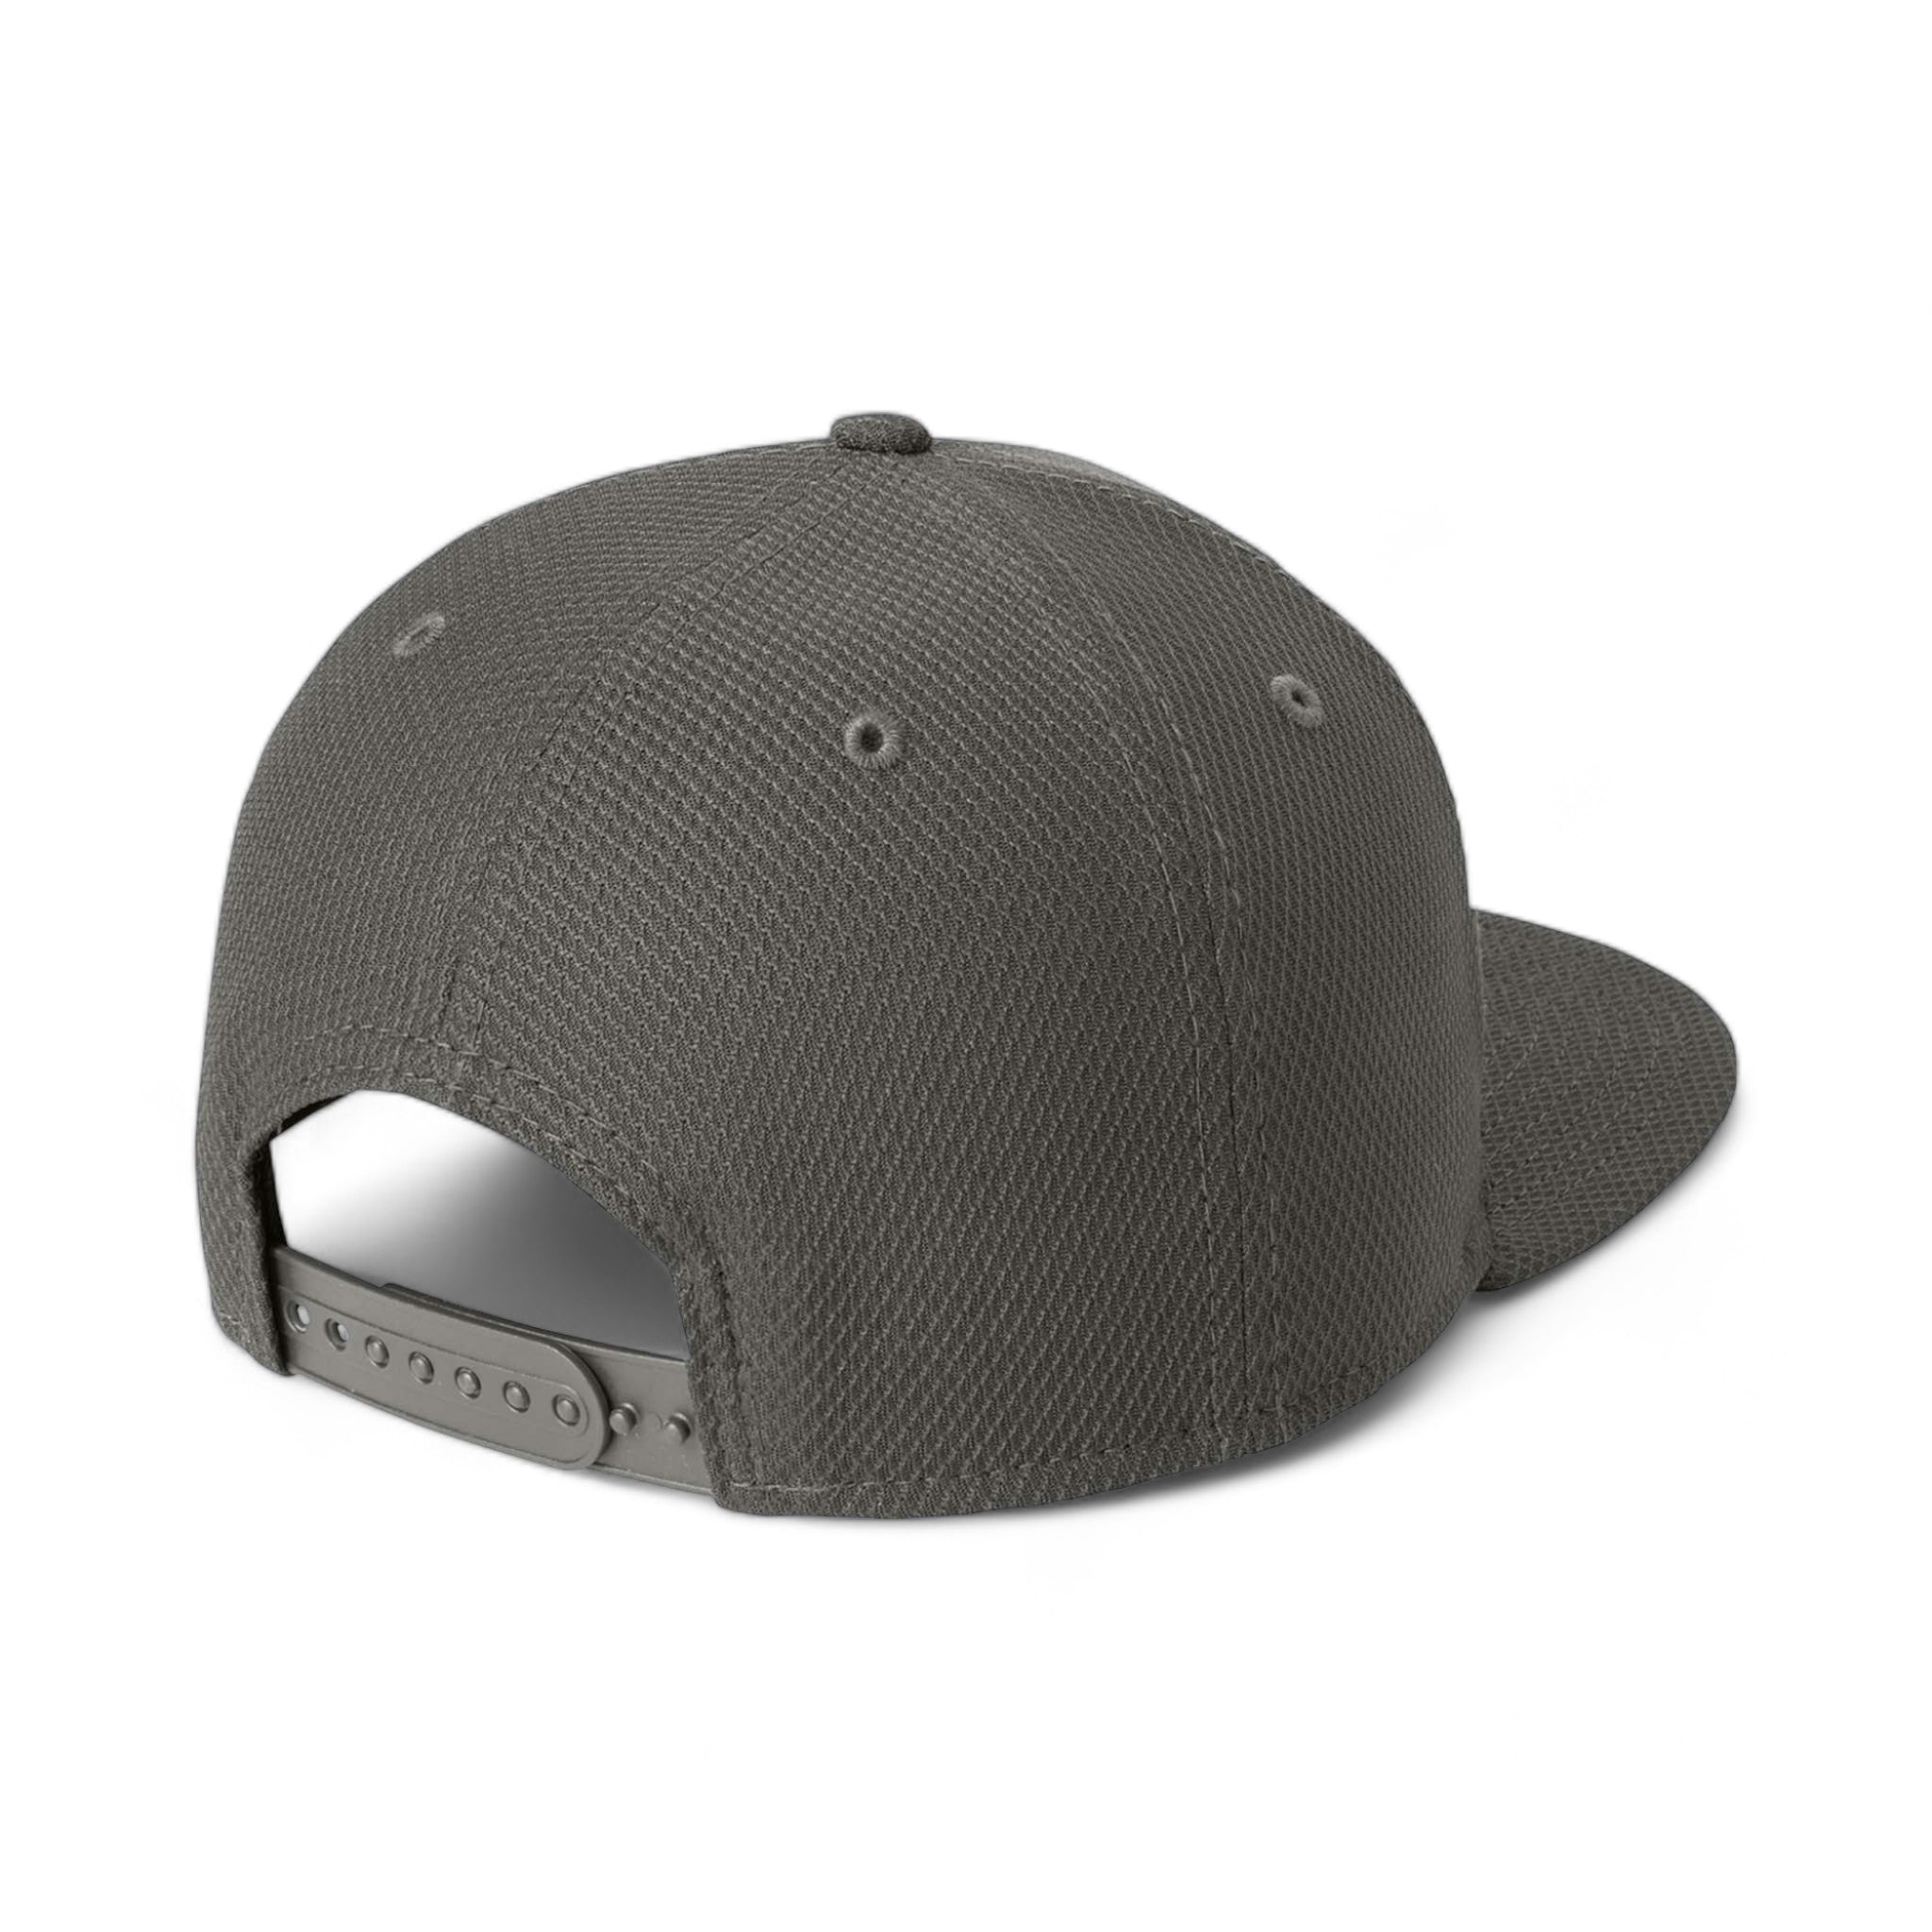 Back view of New Era NE404 custom hat in graphite